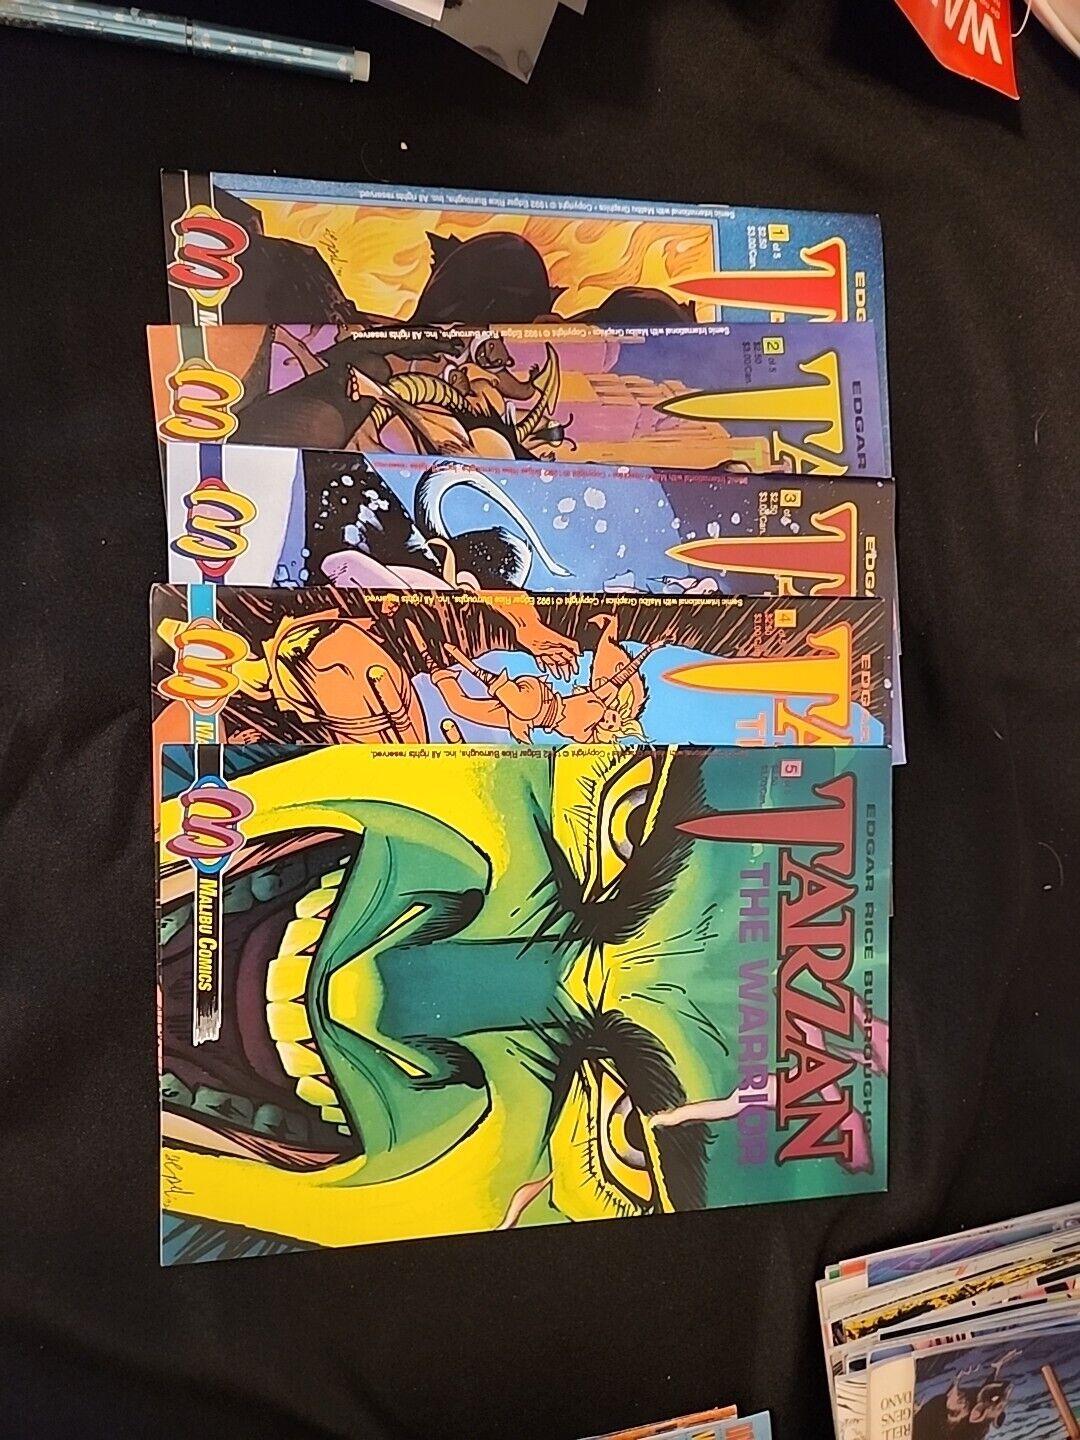 Malibu 1992 TARZAN THE WARRIOR Comic Book Issues # 1-5 Complete Series 1 2 3 4 5